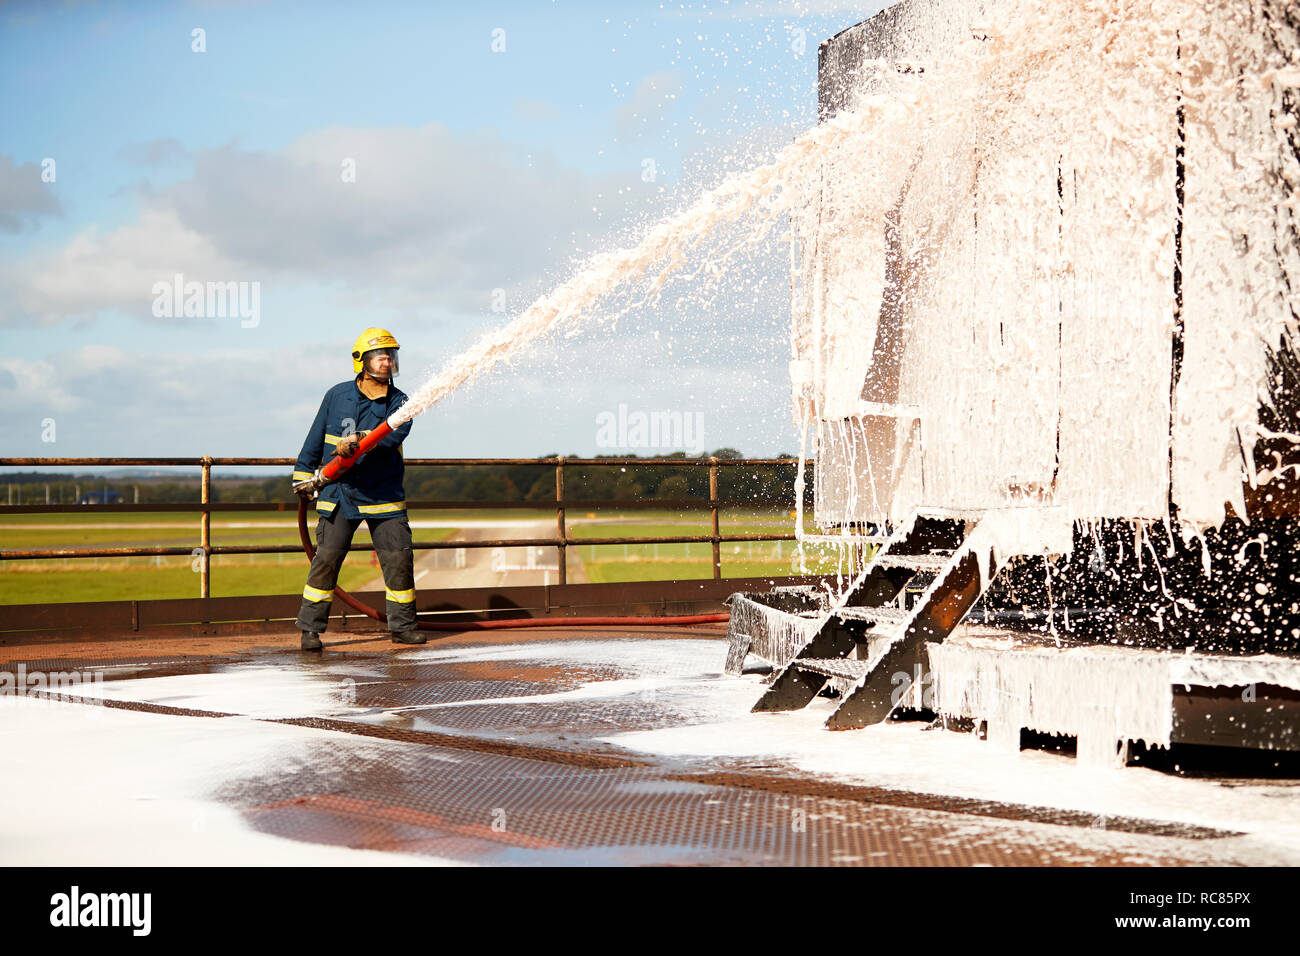 Firemen training, fireman spraying firefighting foam at training facility Stock Photo